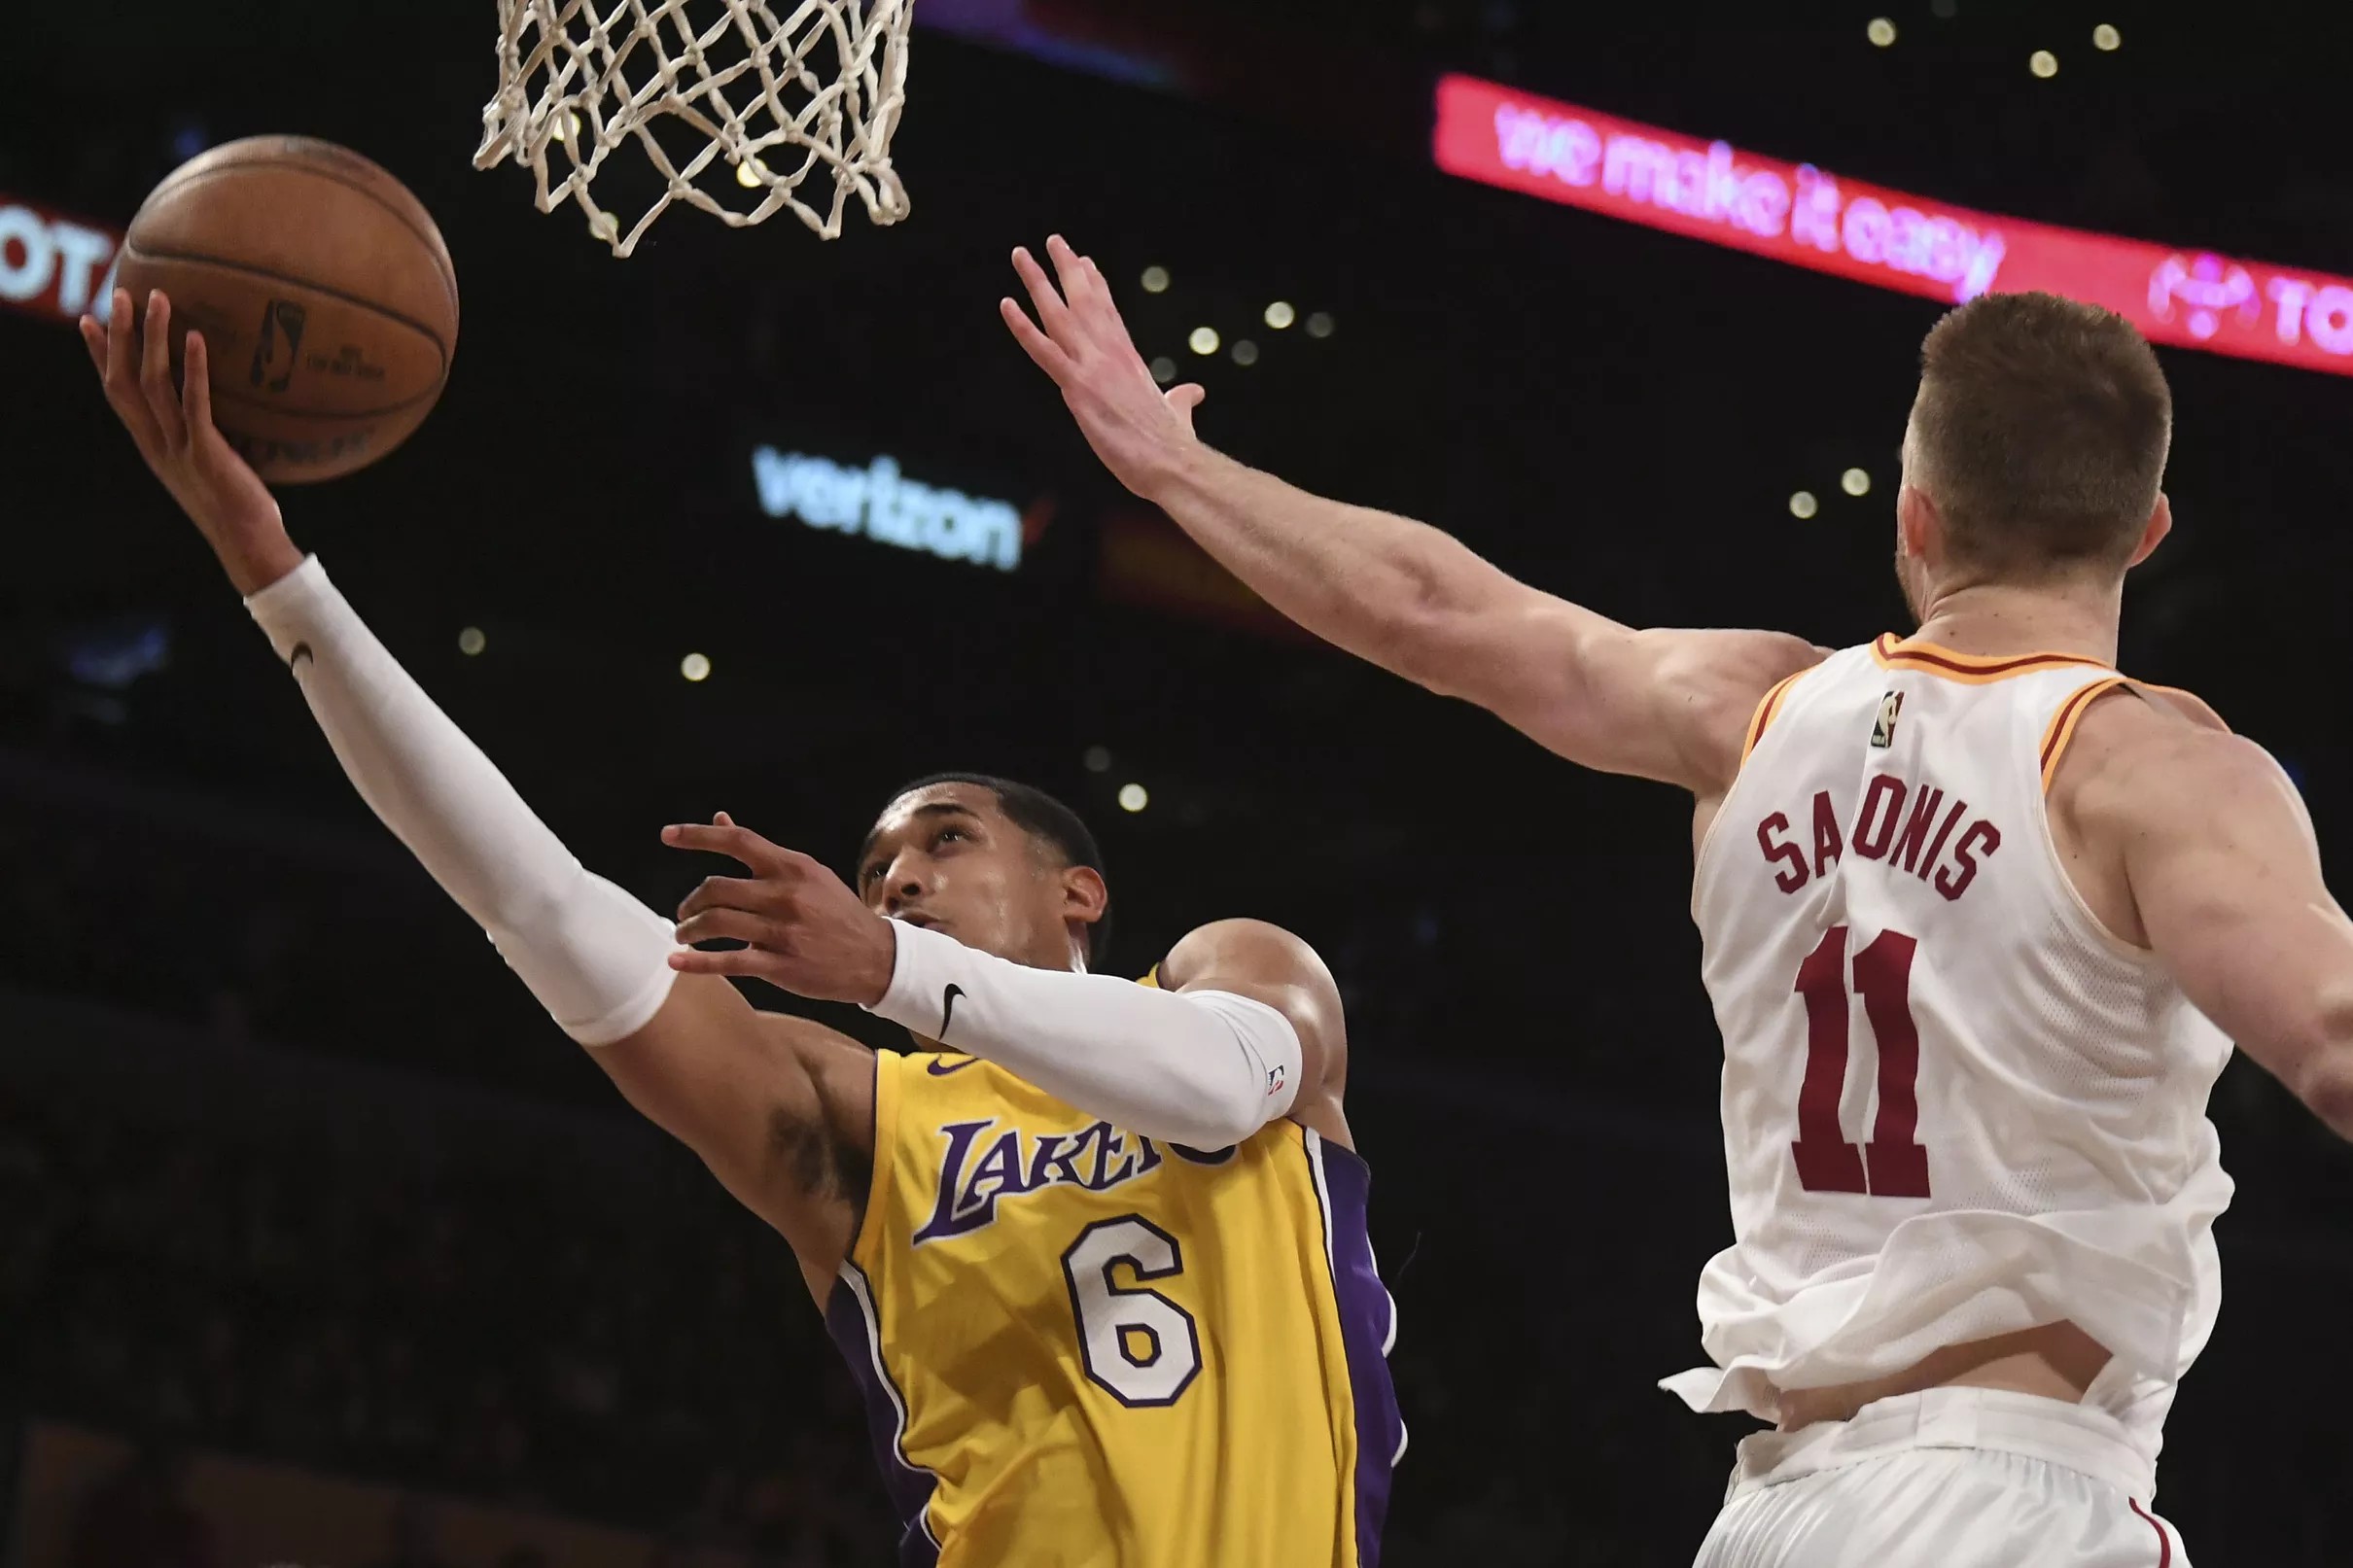 Lakers vs. Pacers Final Score Jordan Clarkson’s seasonhigh outburst